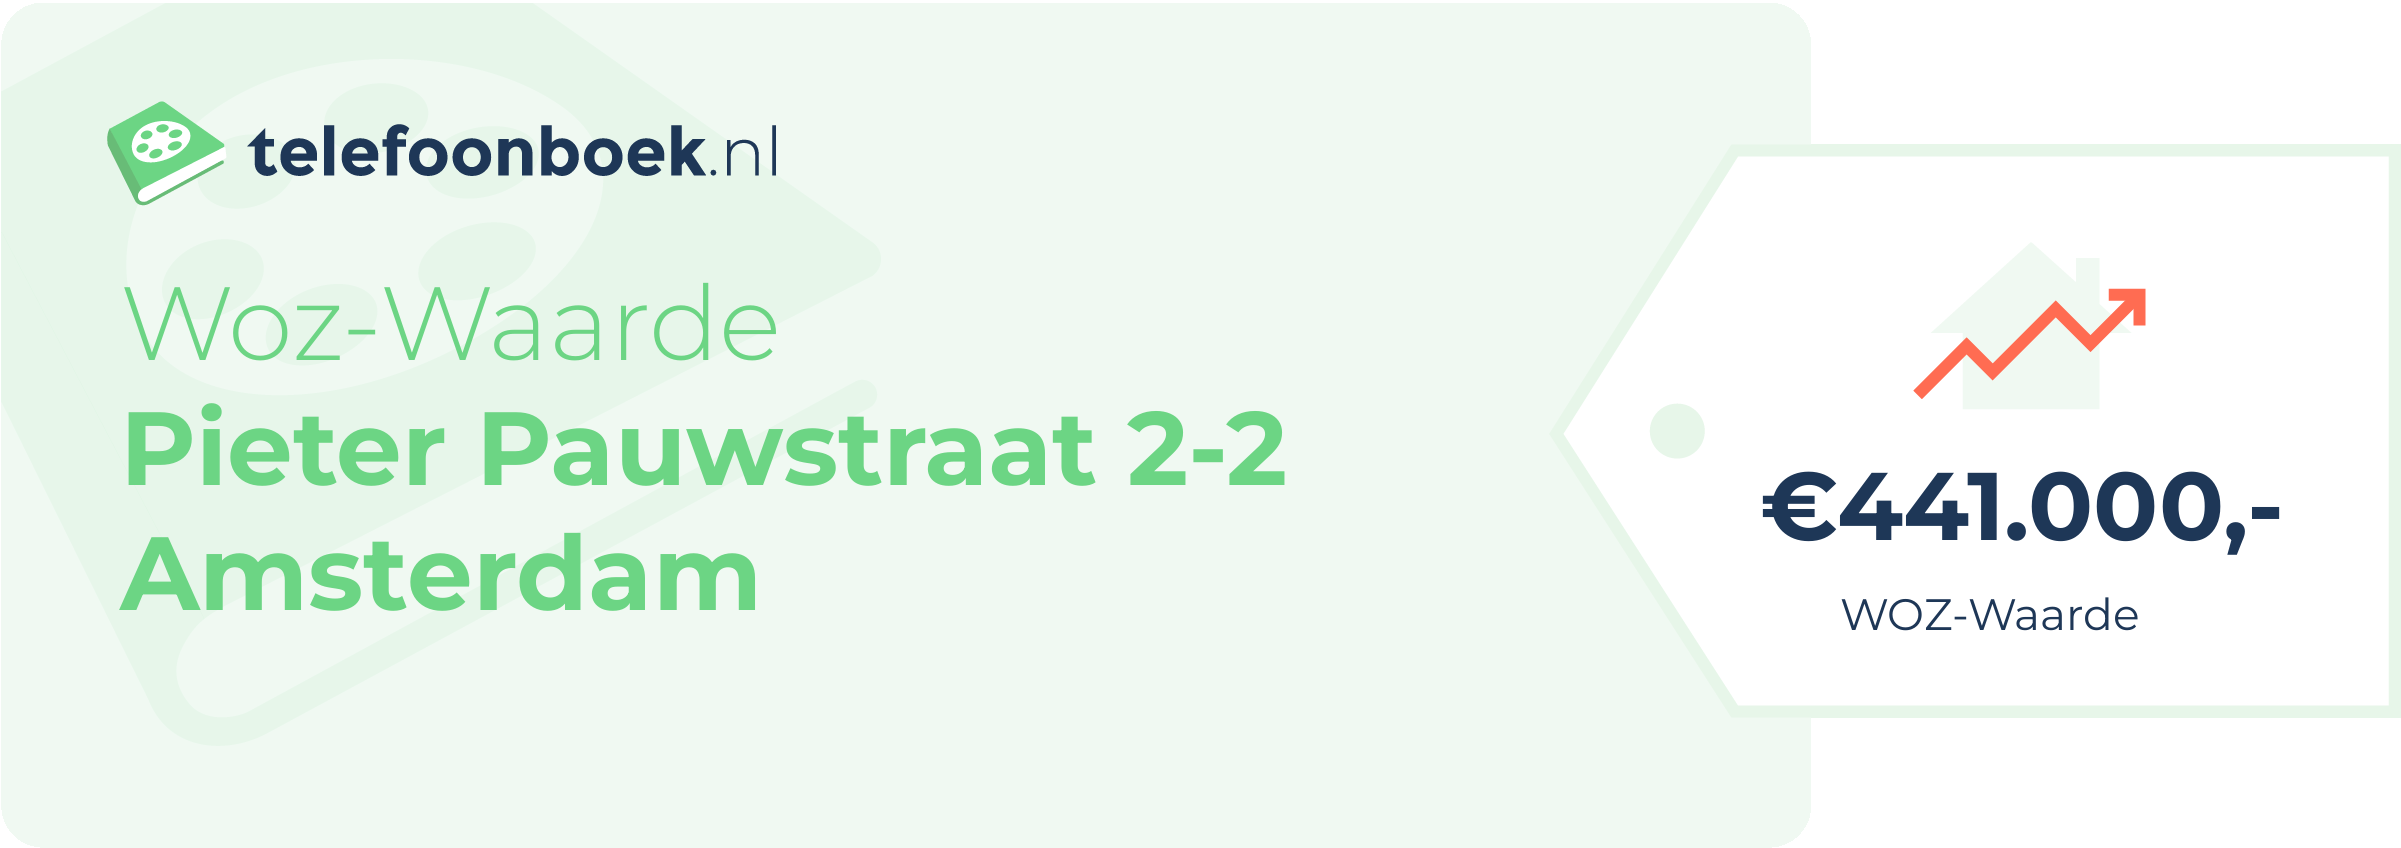 WOZ-waarde Pieter Pauwstraat 2-2 Amsterdam